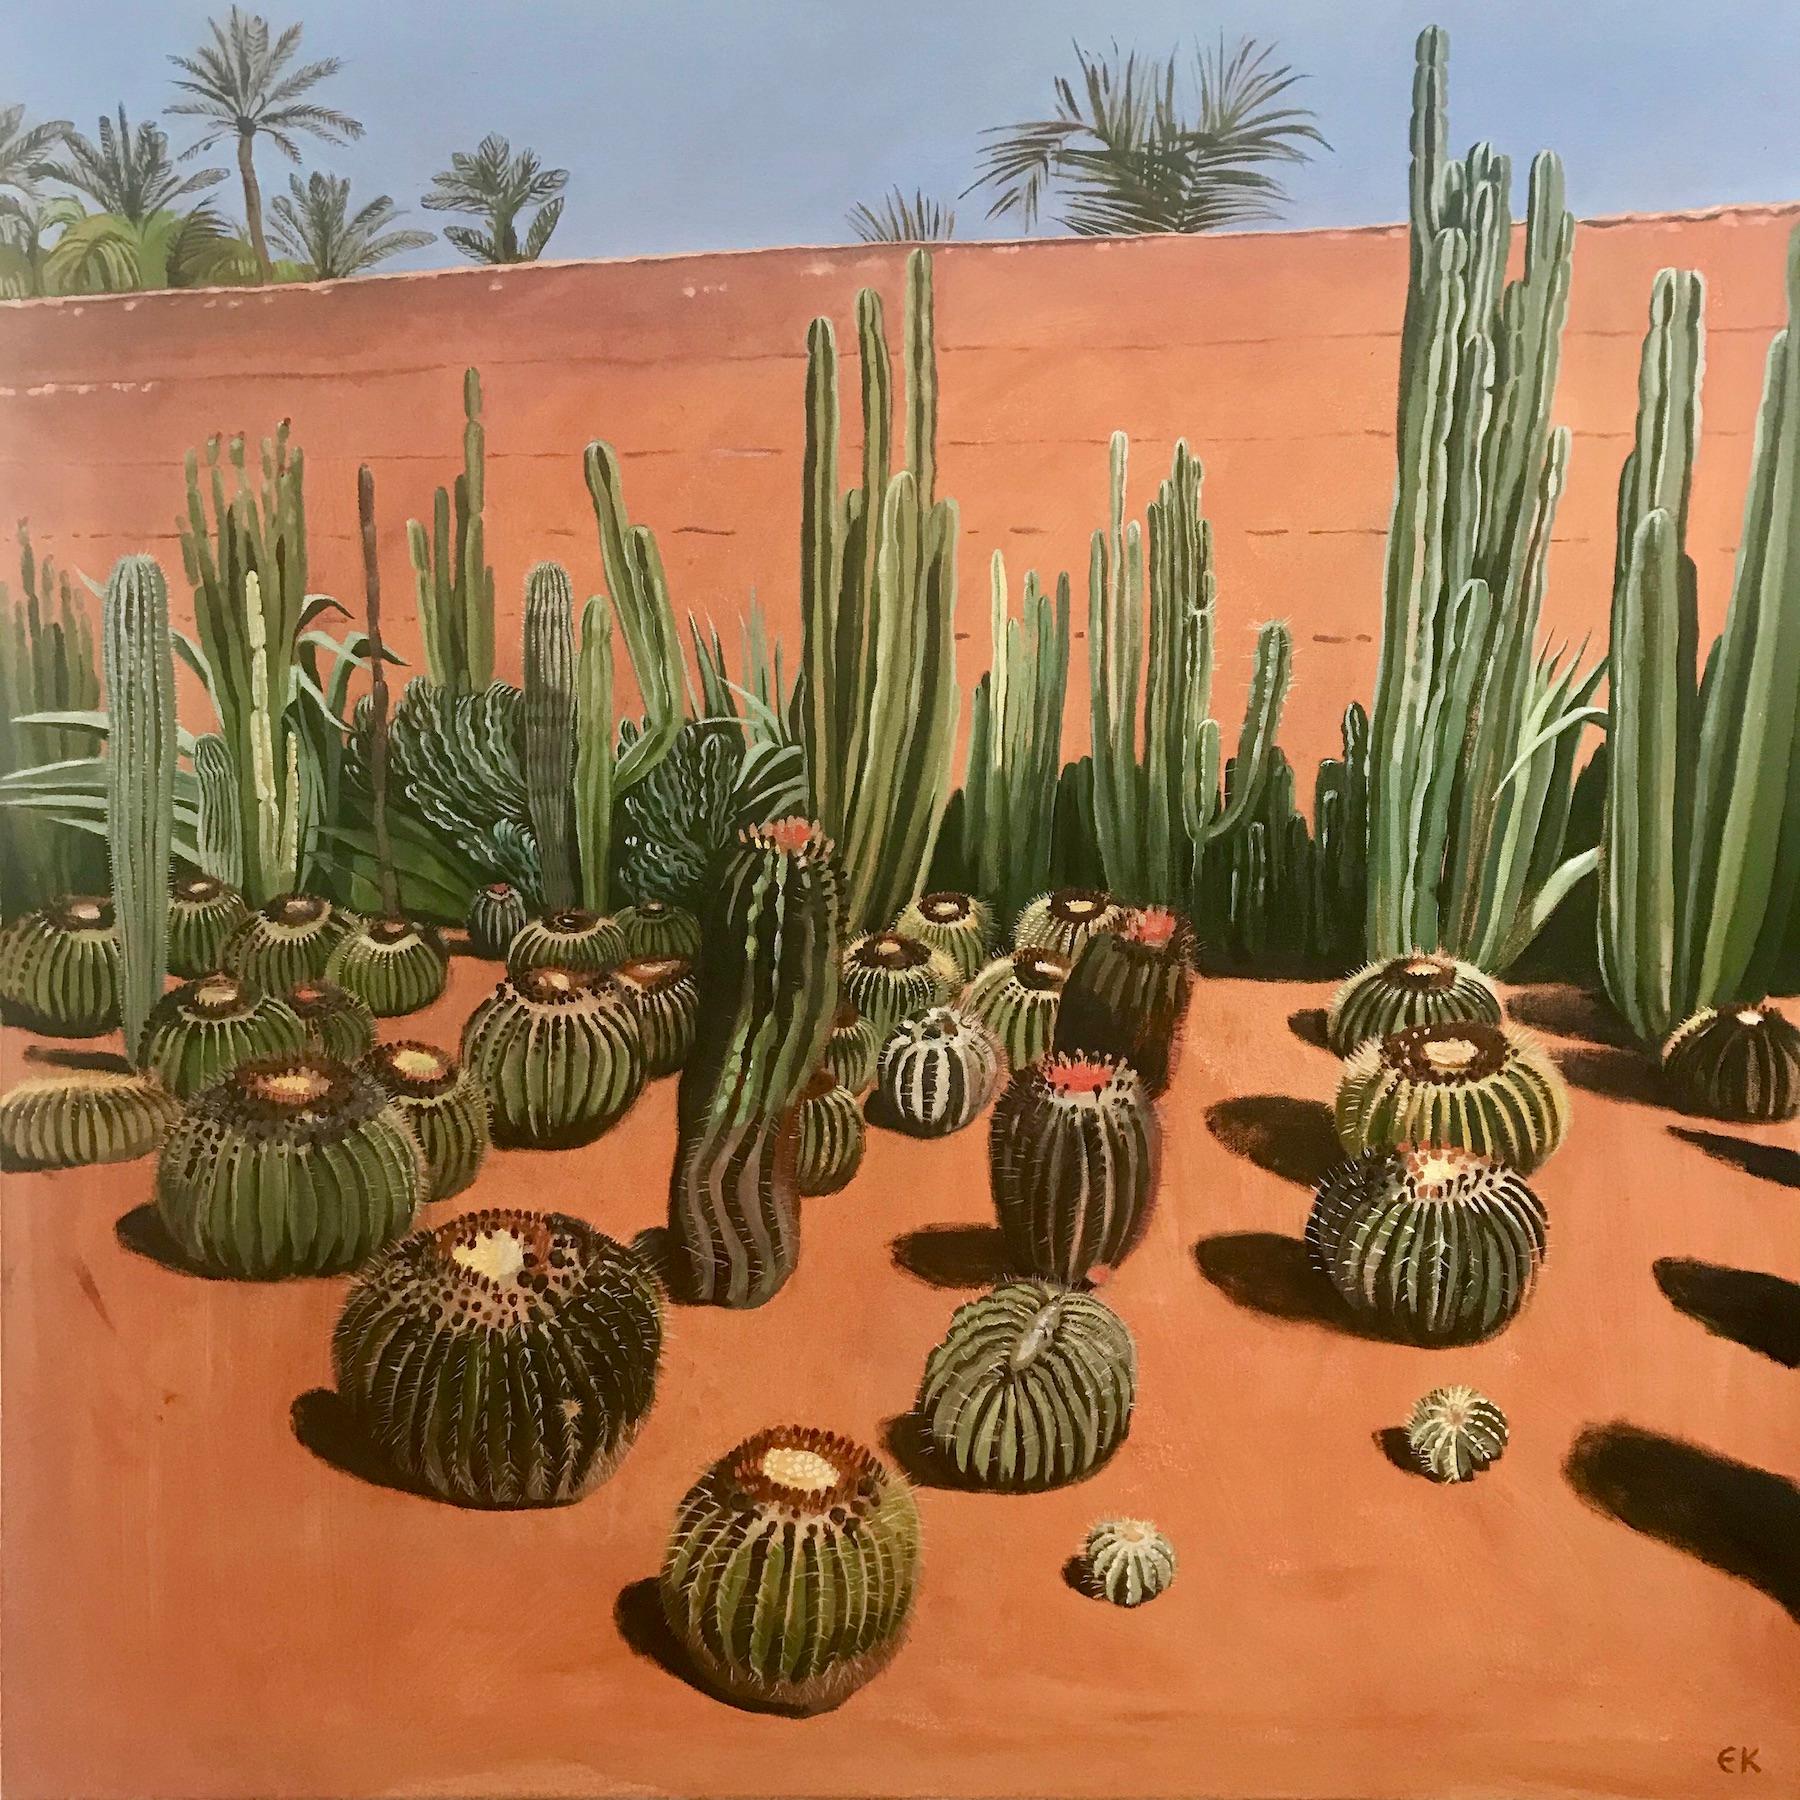 Cactus Madness, Musee de la Palmeraie, Morocco, Original painting, Desert art